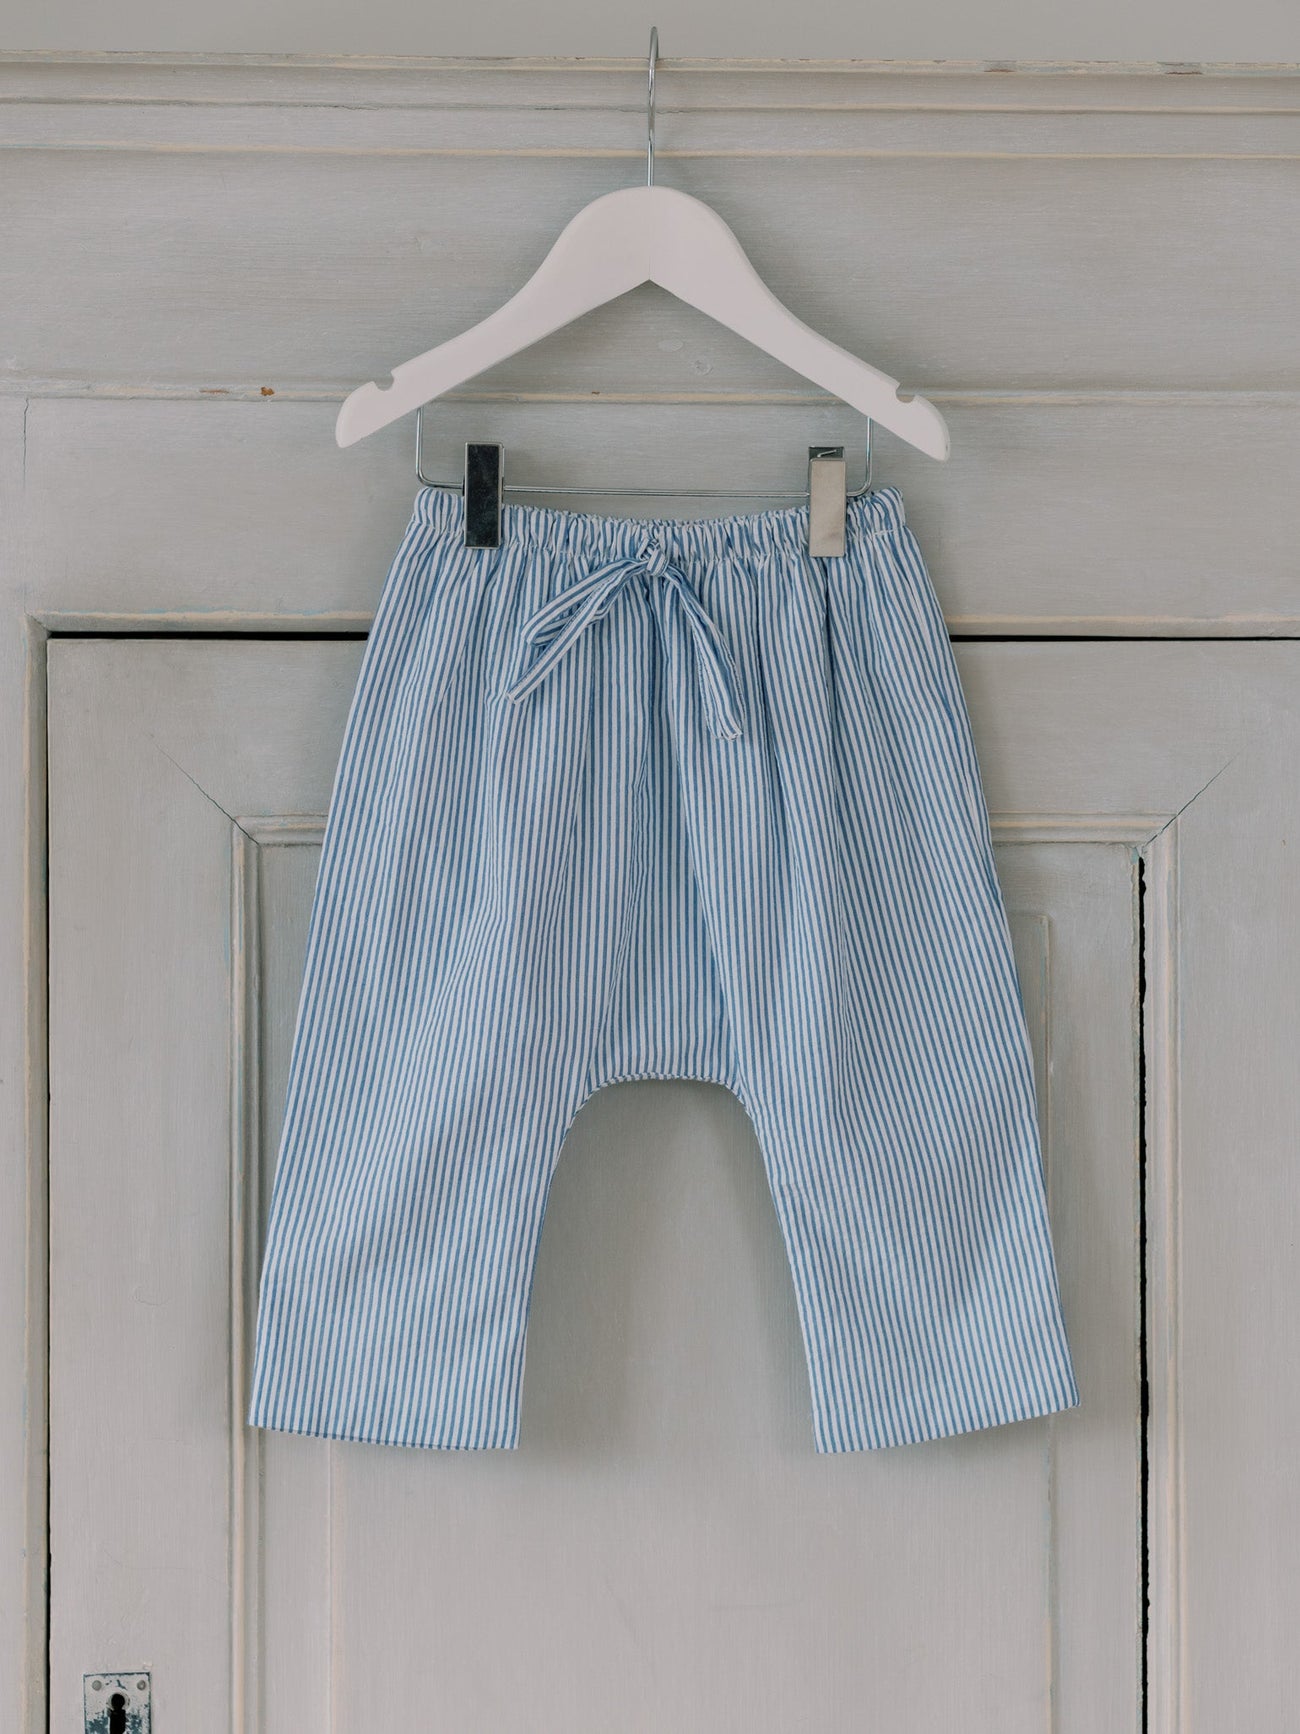 Blue Stripe Alex Cotton Baby Trousers